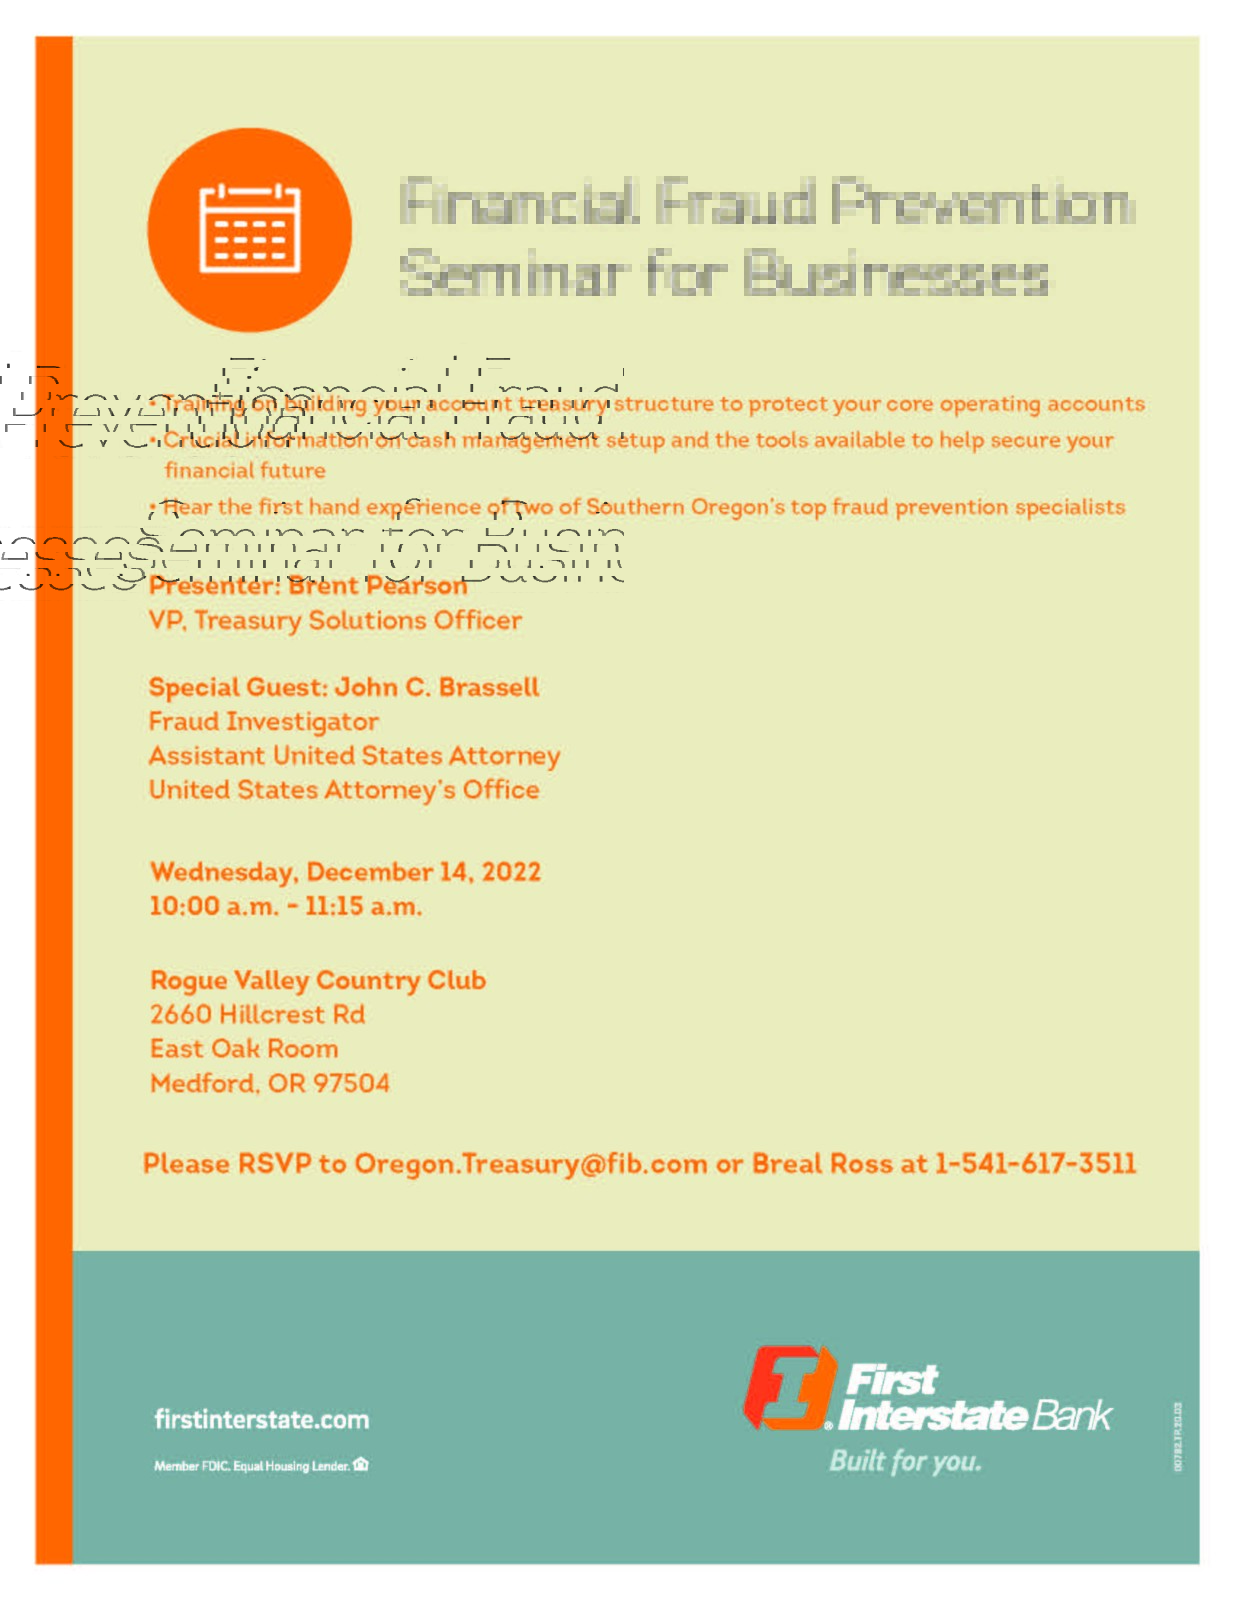 Financial Fraud Prevention flyer (1)